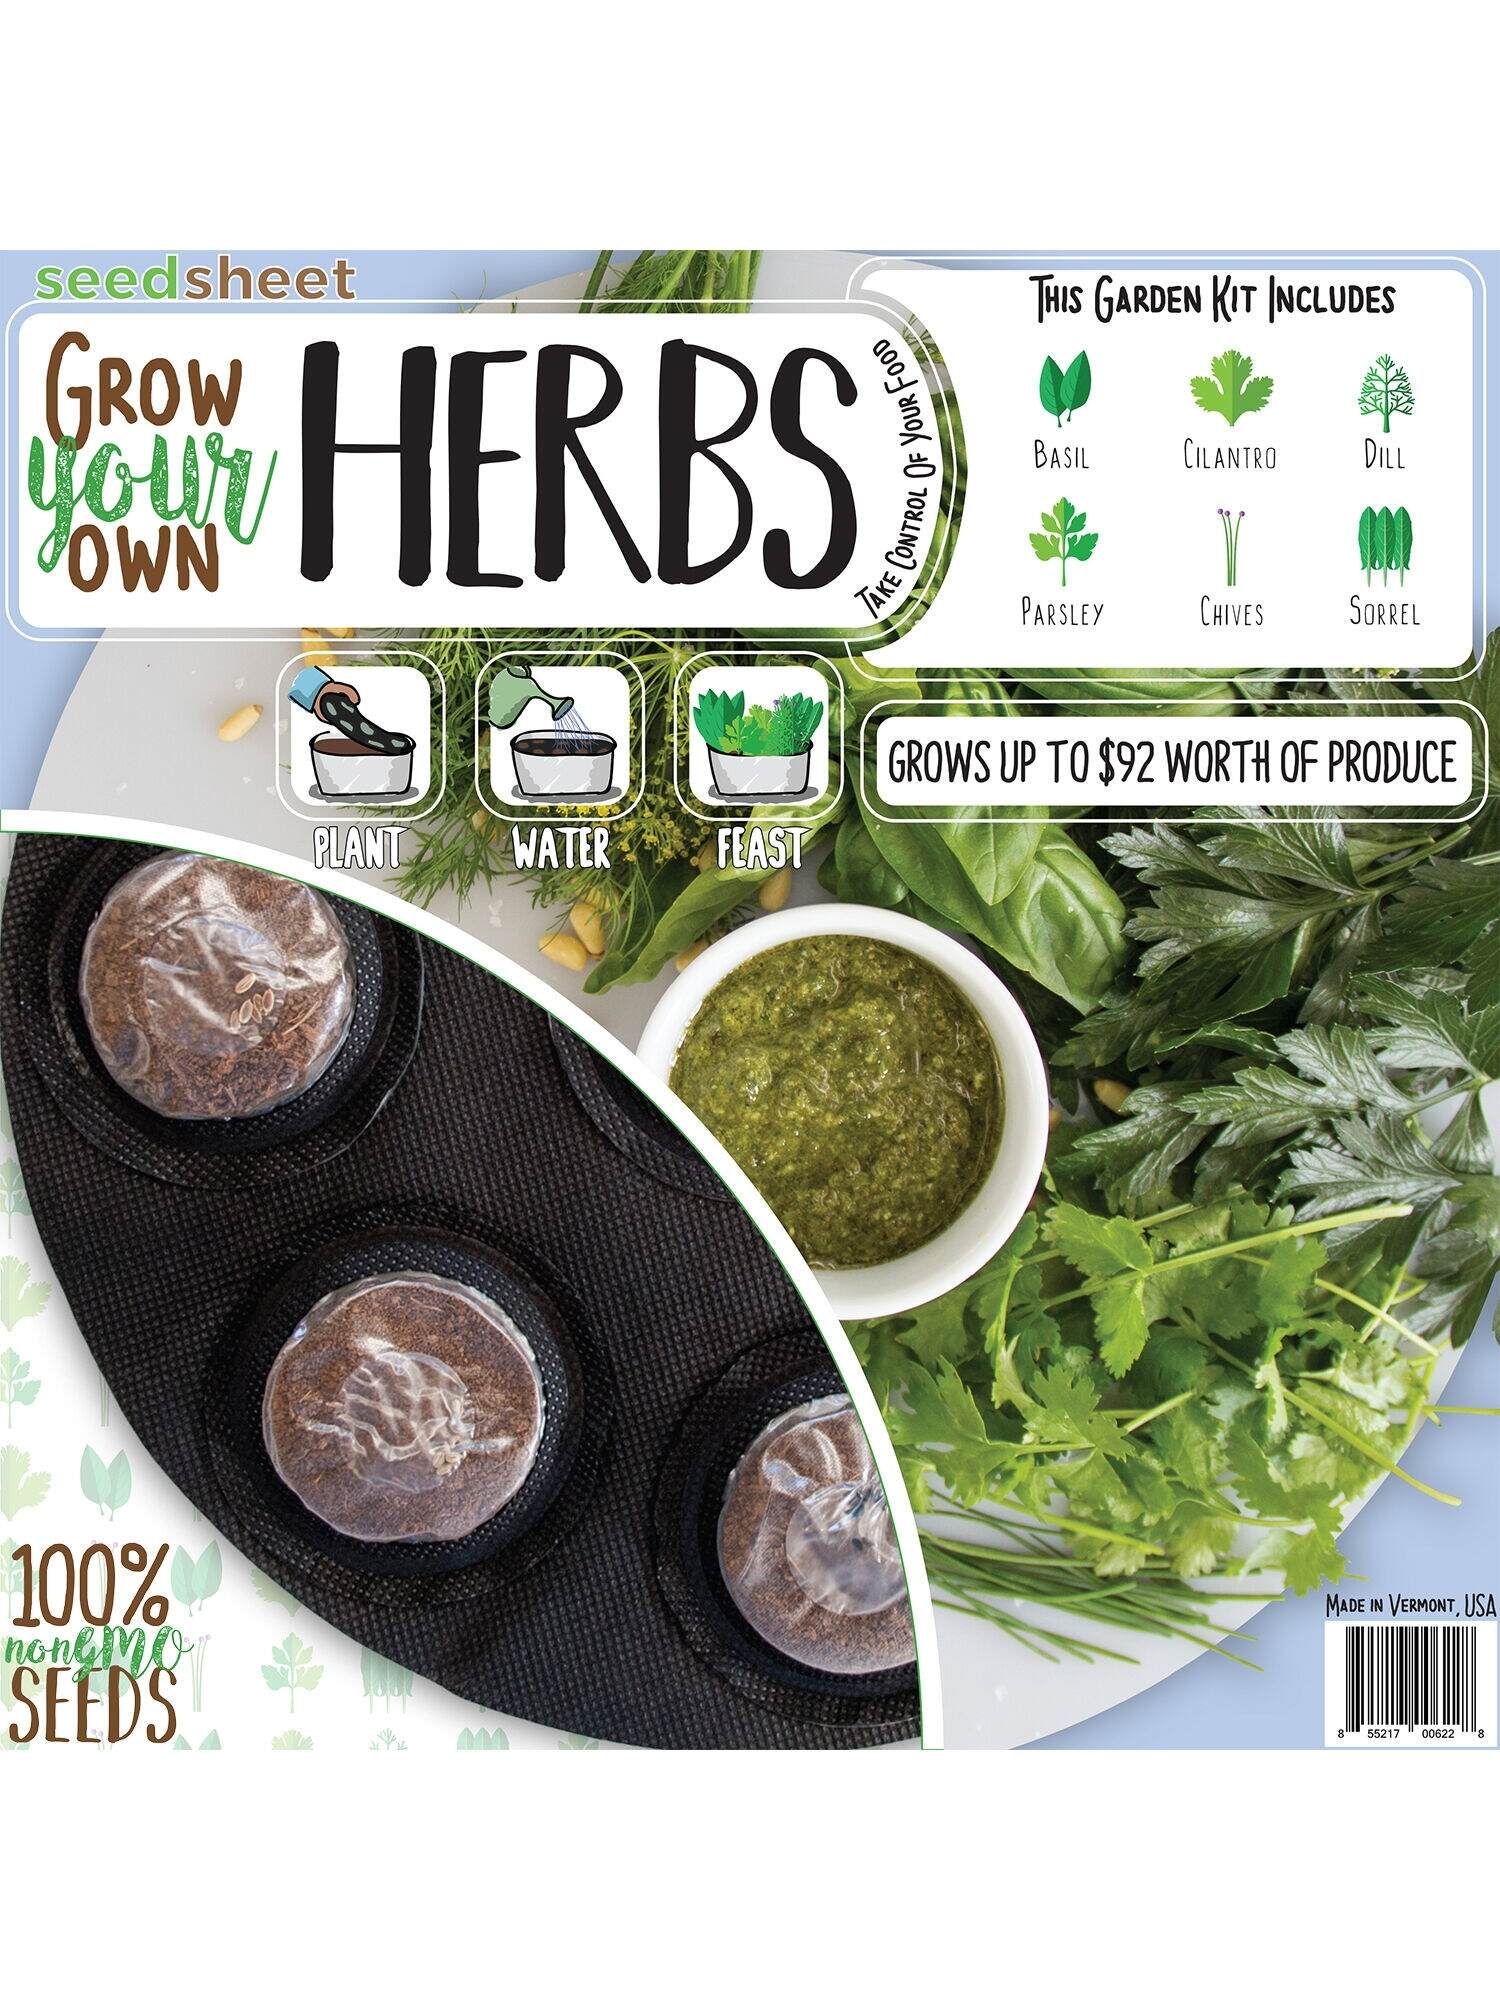 Seedsheet Grow Your Own Herbs Container Garden Complete Kit 